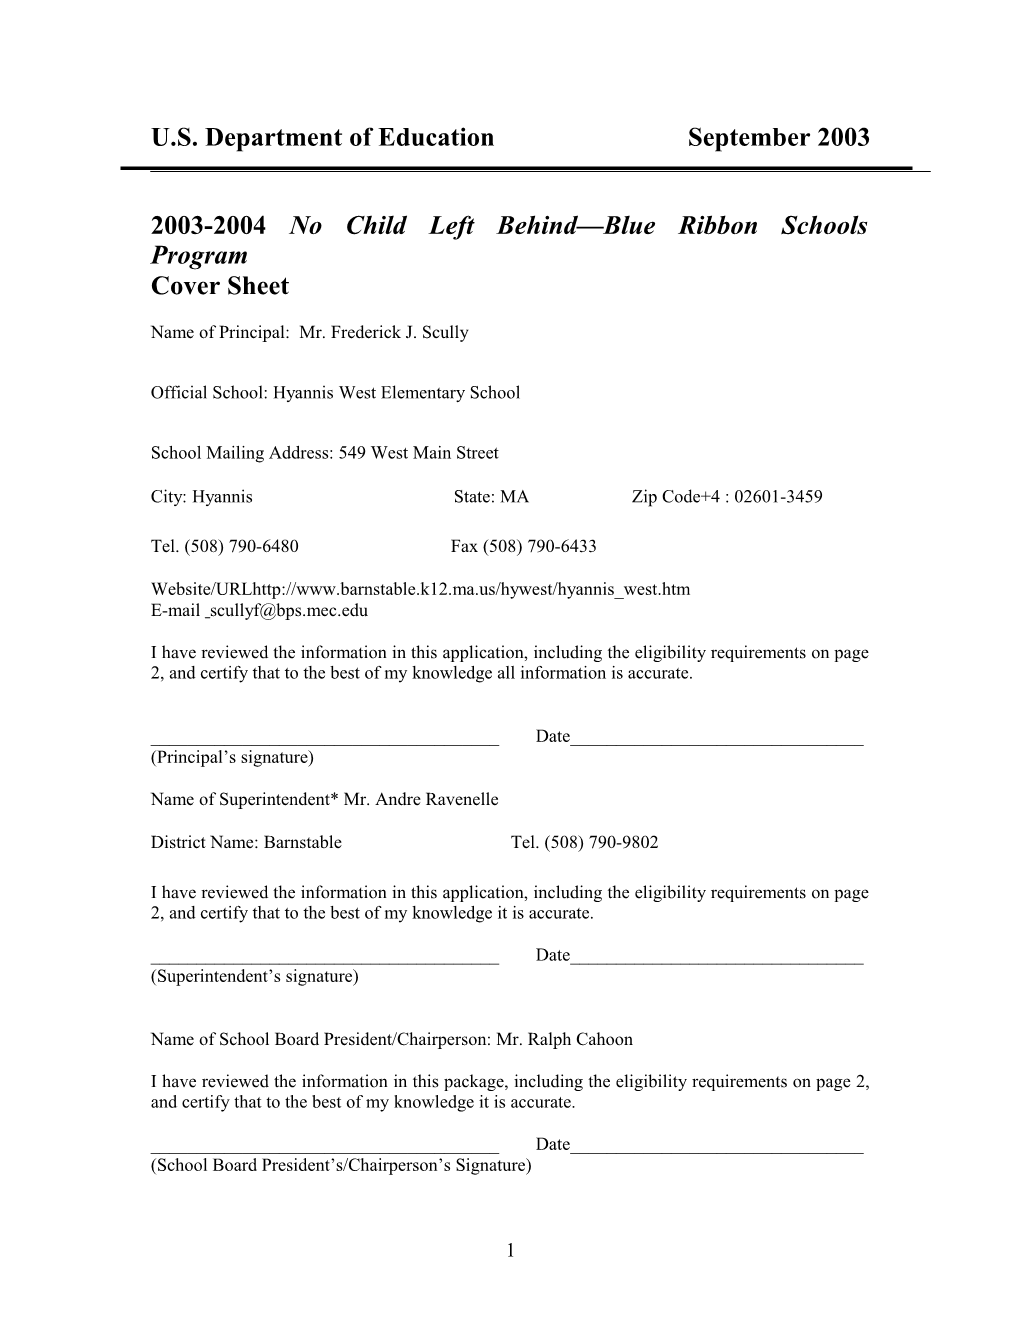 Hyannis West Elementary School 2004 No Child Left Behind-Blue Ribbon School Application (Msword)